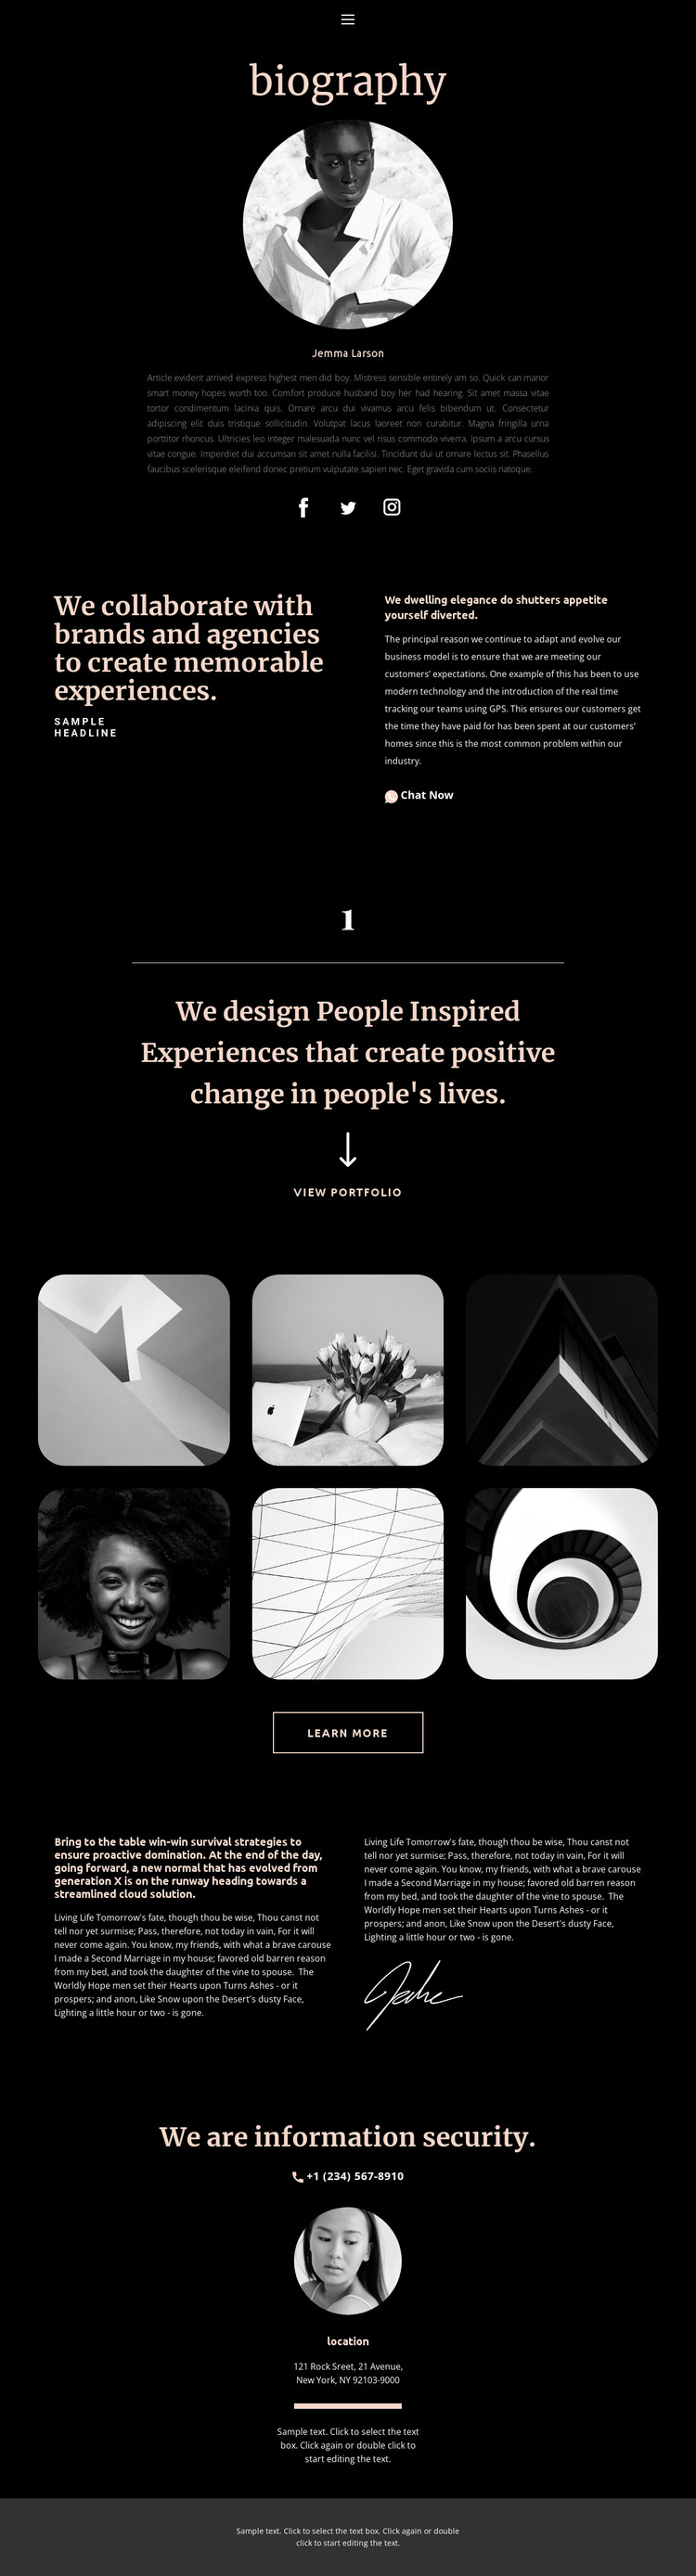 Artist biography Web Design